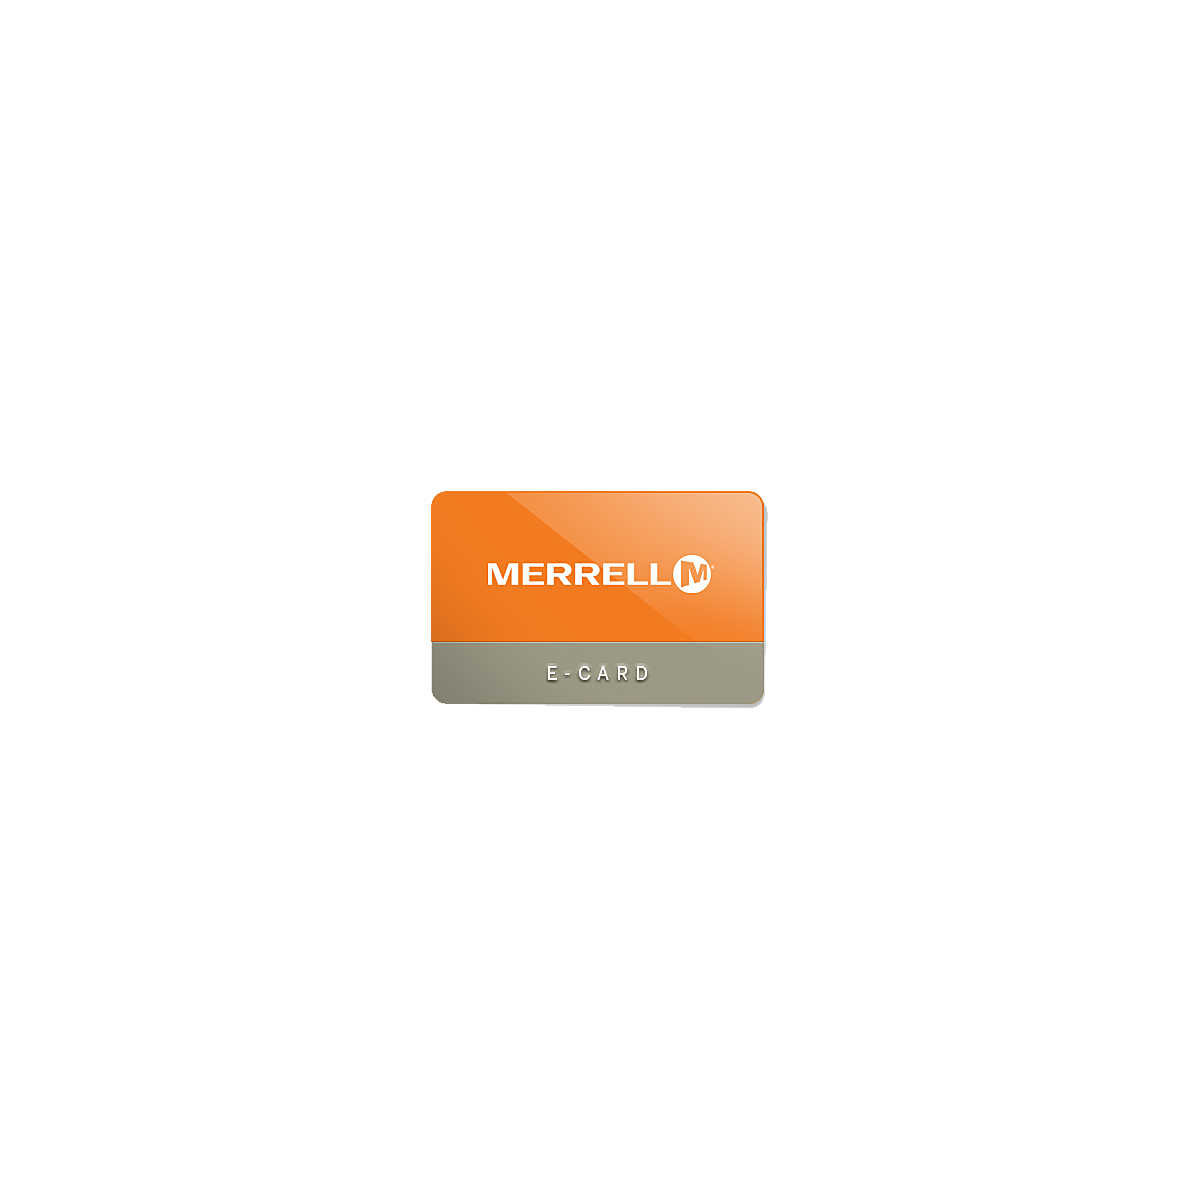 Merrell Gift Card, e-Gift Card, dynamic 1